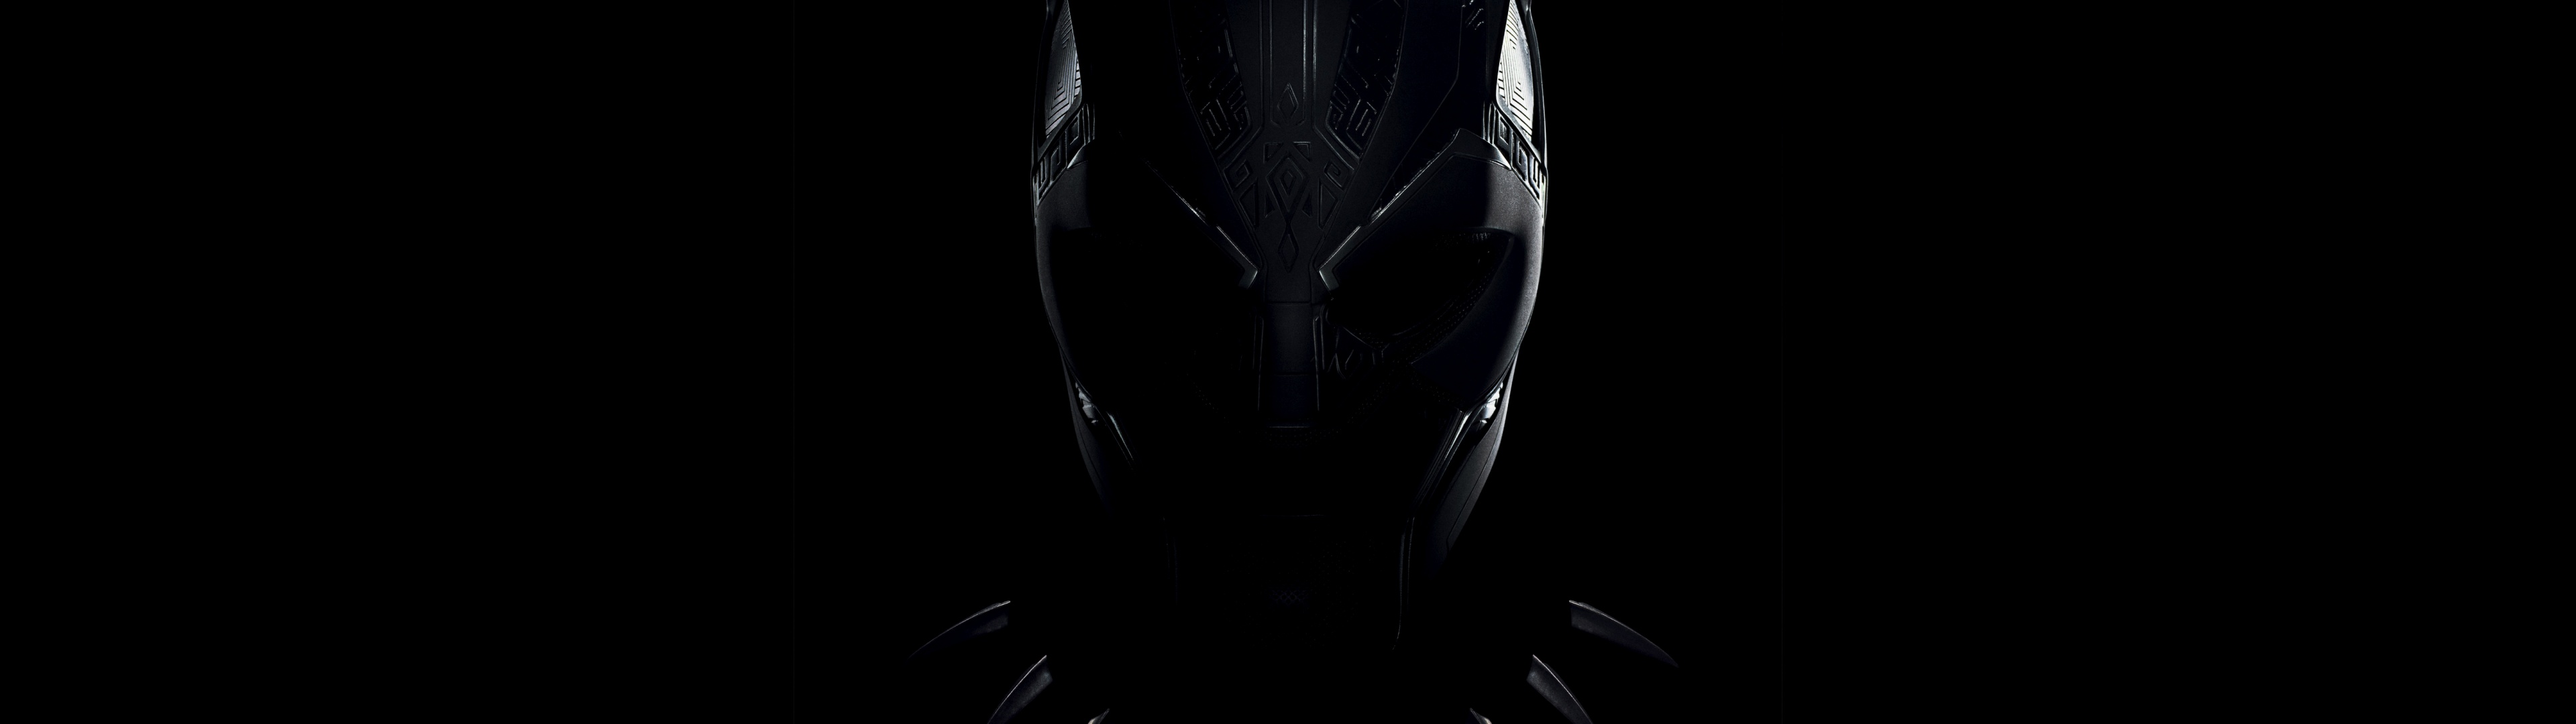 Black Panther Wallpaper 4K, Marvel Superheroes, Graphics CGI, #8385